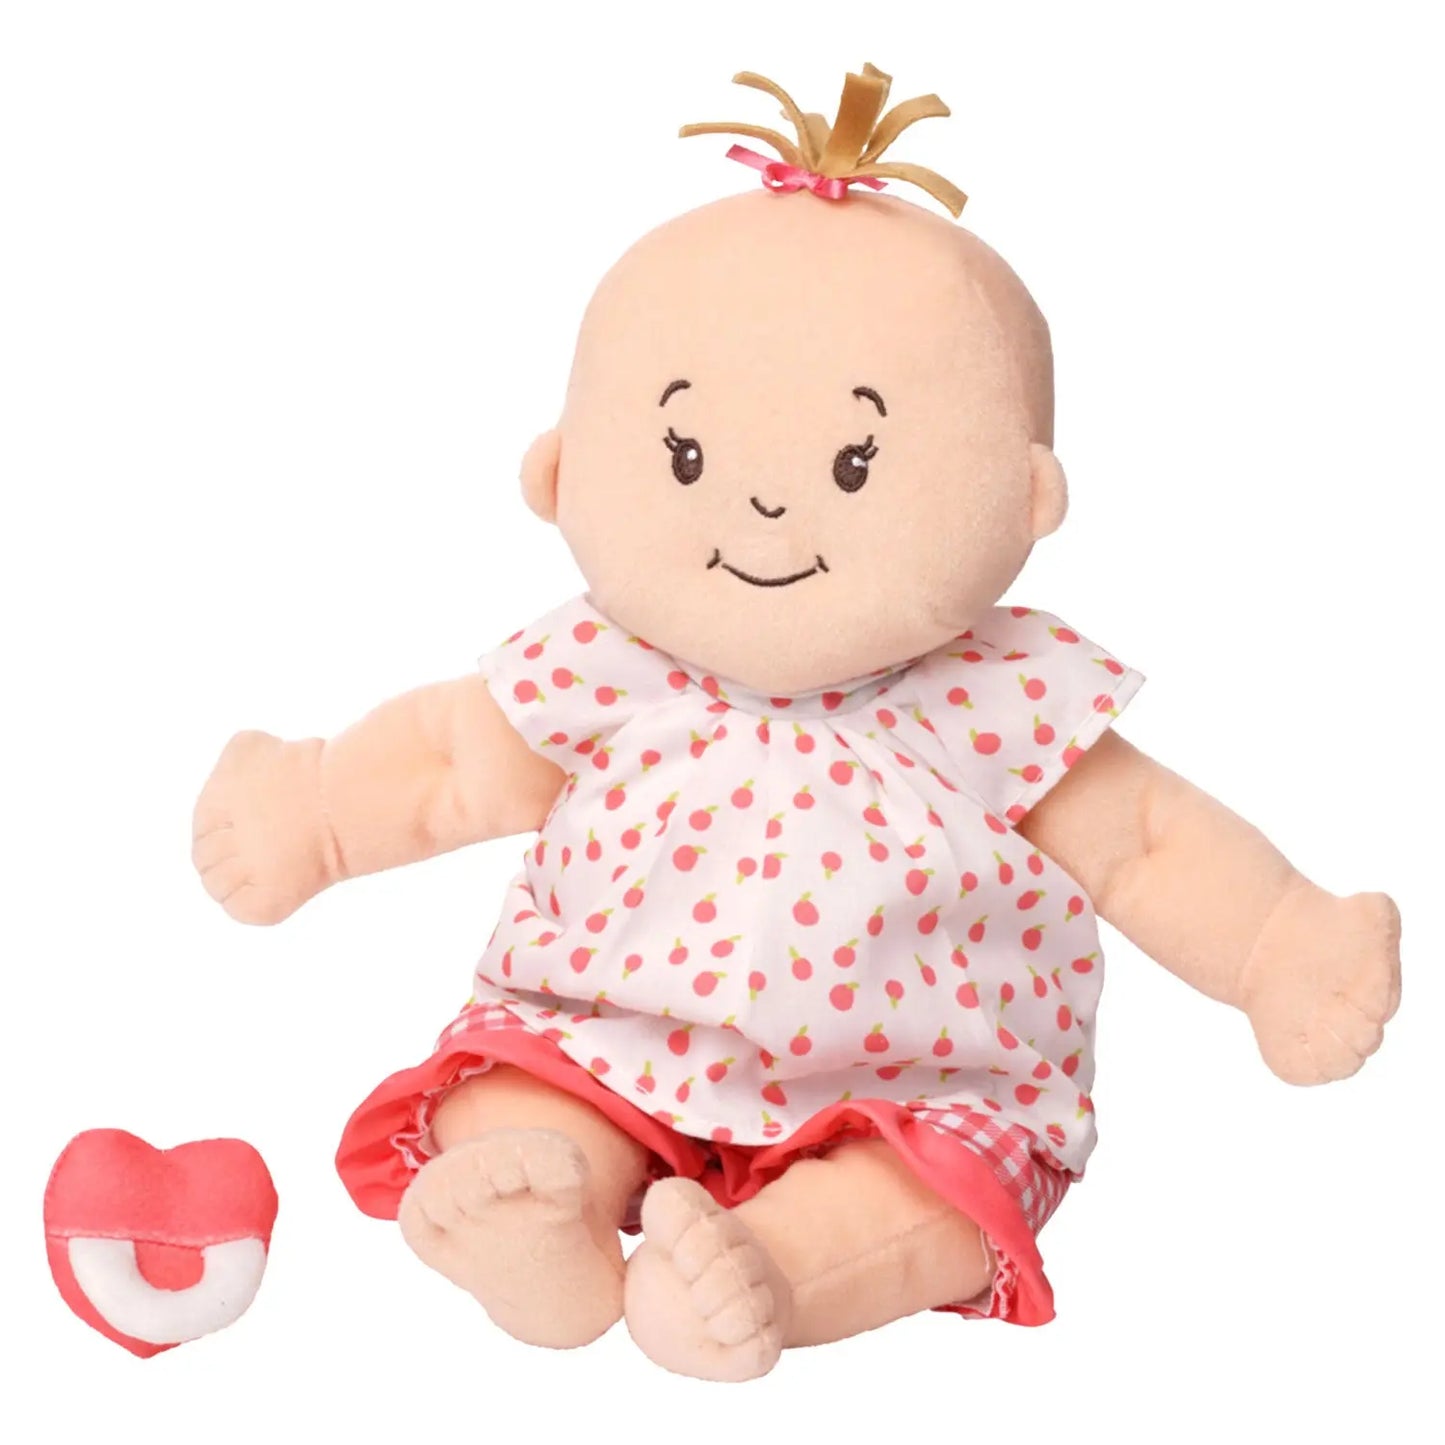 Baby Stella Doll - Light Brown Hair - Lulie